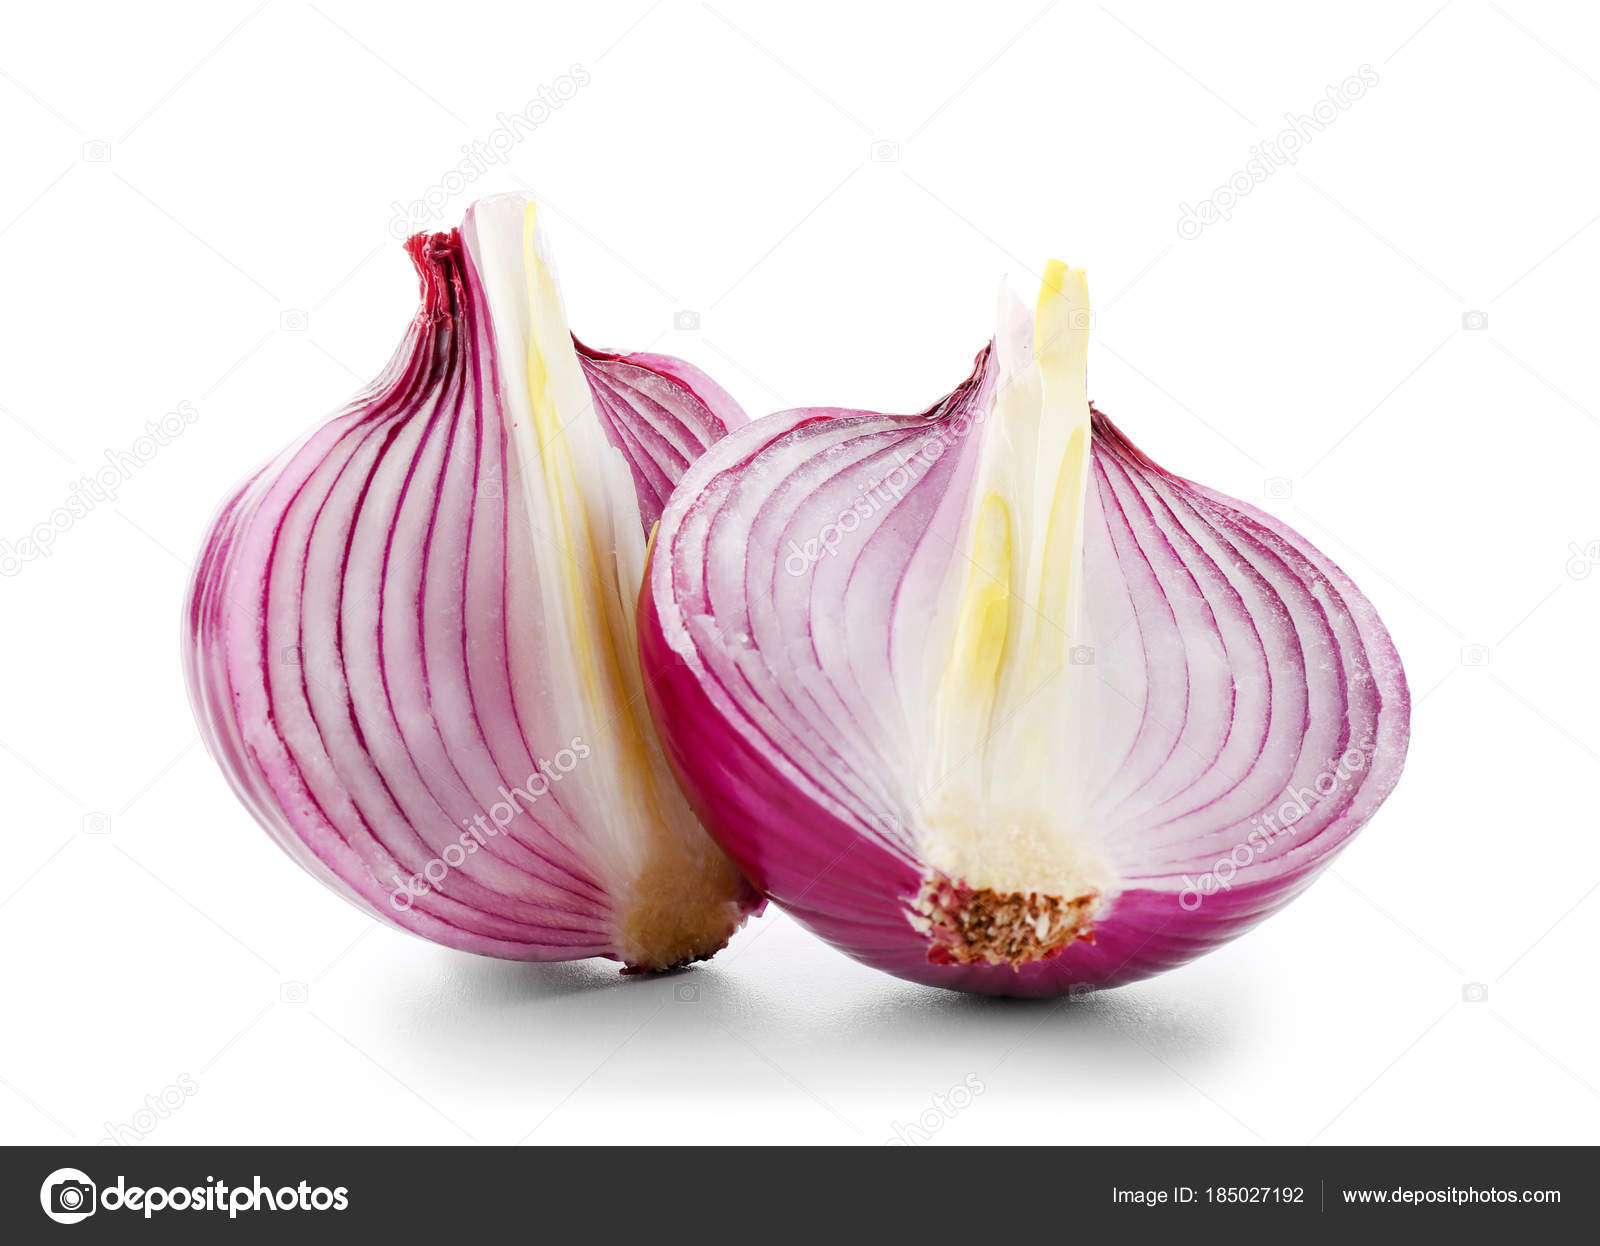 Onion halves photo